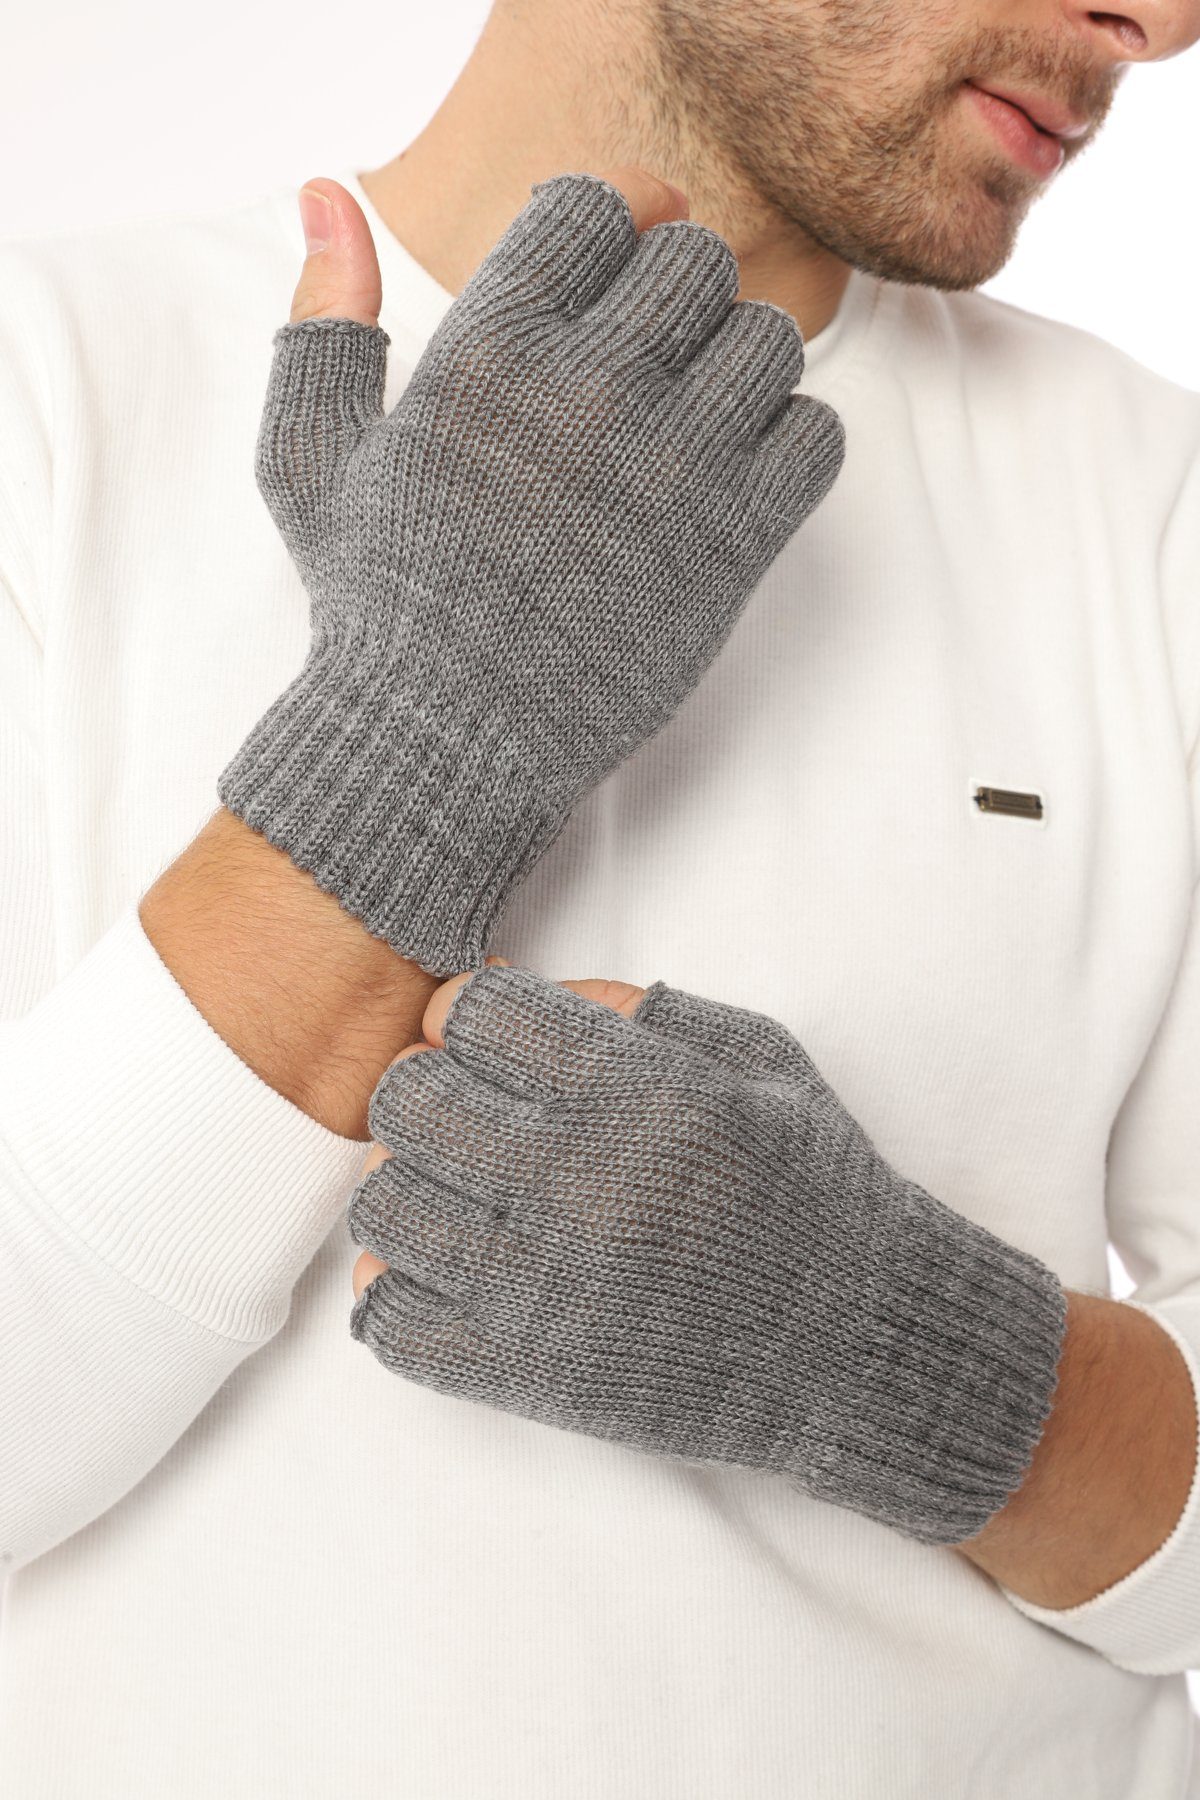 herémood Strickhandschuhe Herren Dunkelgrau Rippstrick Winterhandschuhe Strickhandschuhe Handschuhe